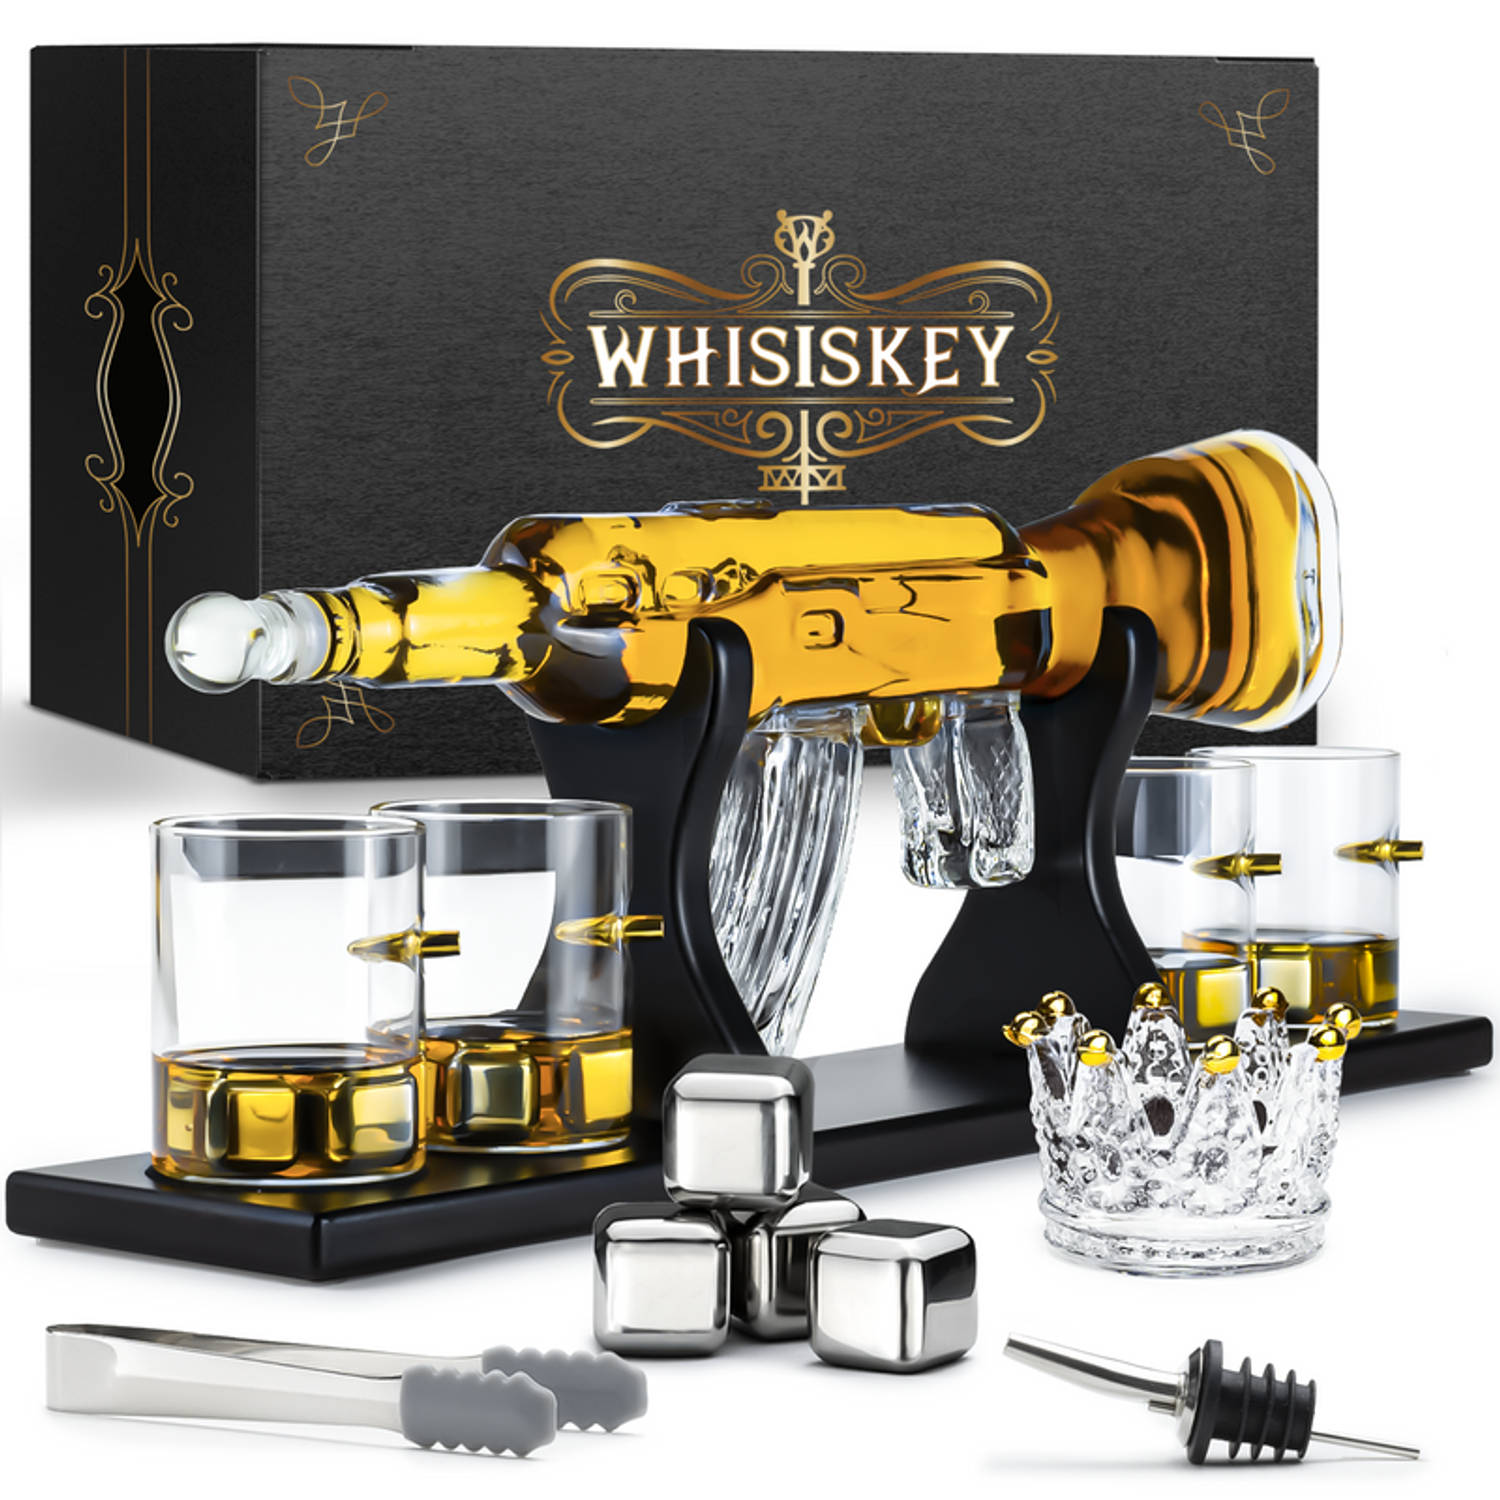 Whisiskey Whiskey Karaf Ak-47 Luxe Whisky Karaf Set 1 L Decanteer Karaf Incl. Accessoires